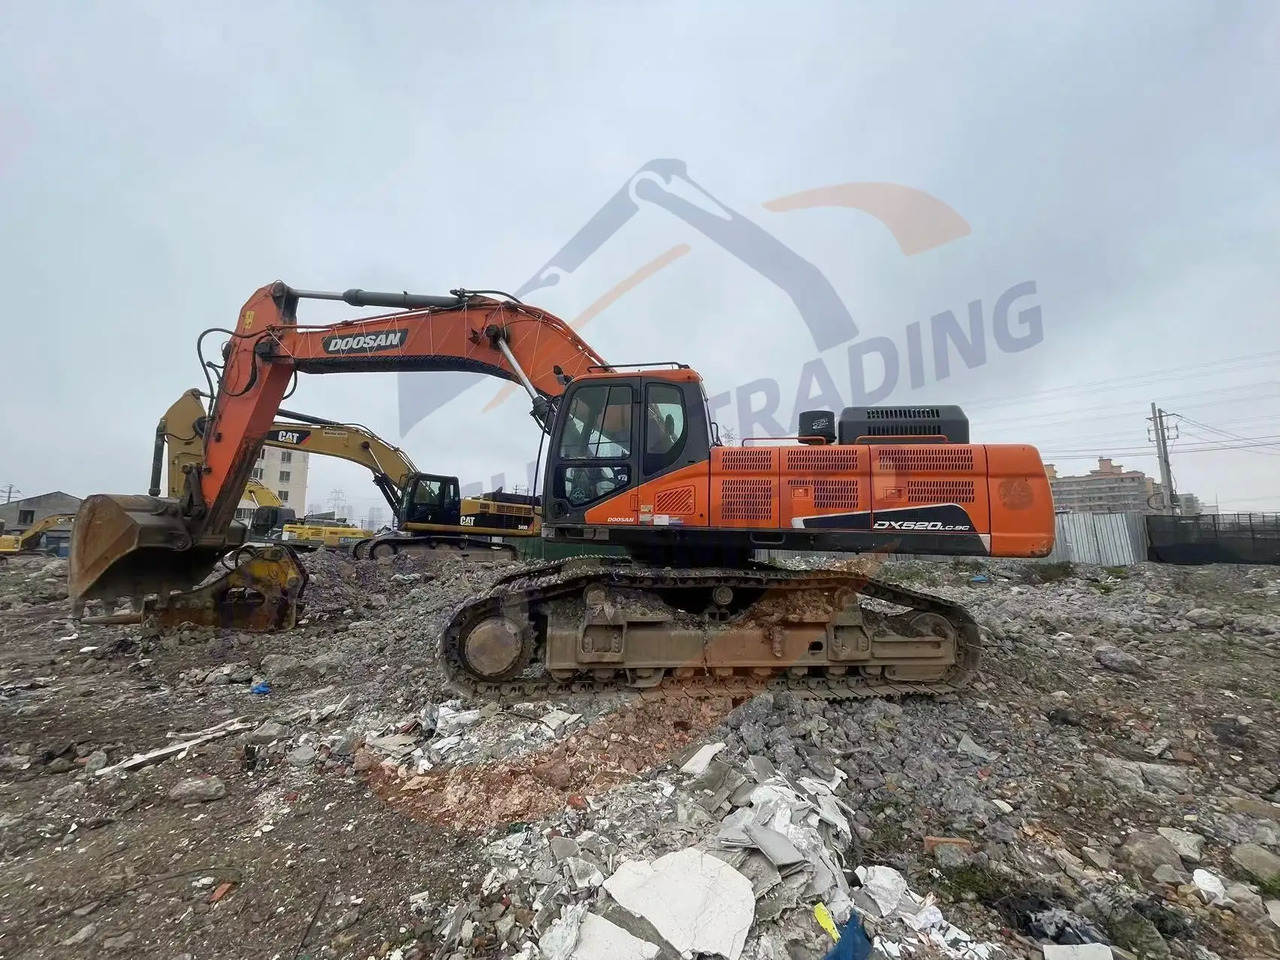 Crawler excavator Low running hours Used Doosan excavator DX520LC-9C in good condition for sale: picture 4